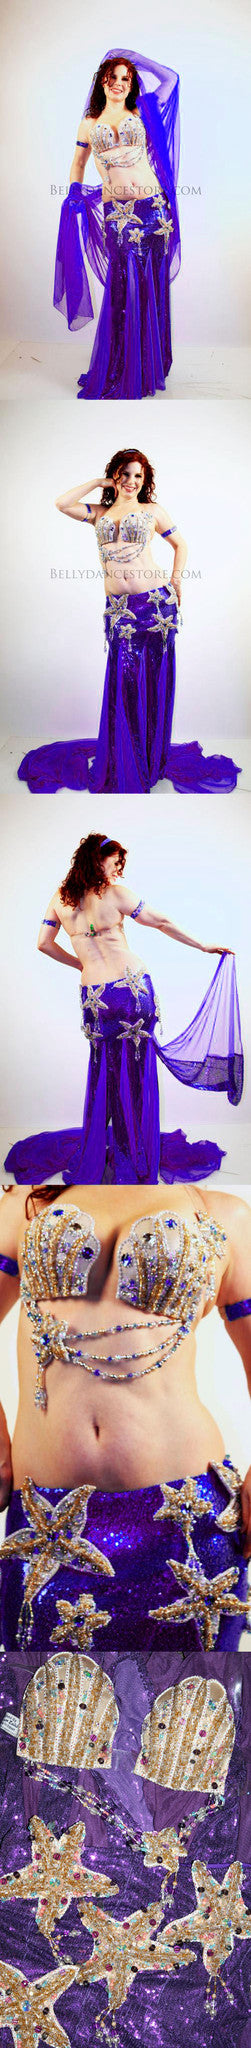 Eman Zaki  Mermaid Costume